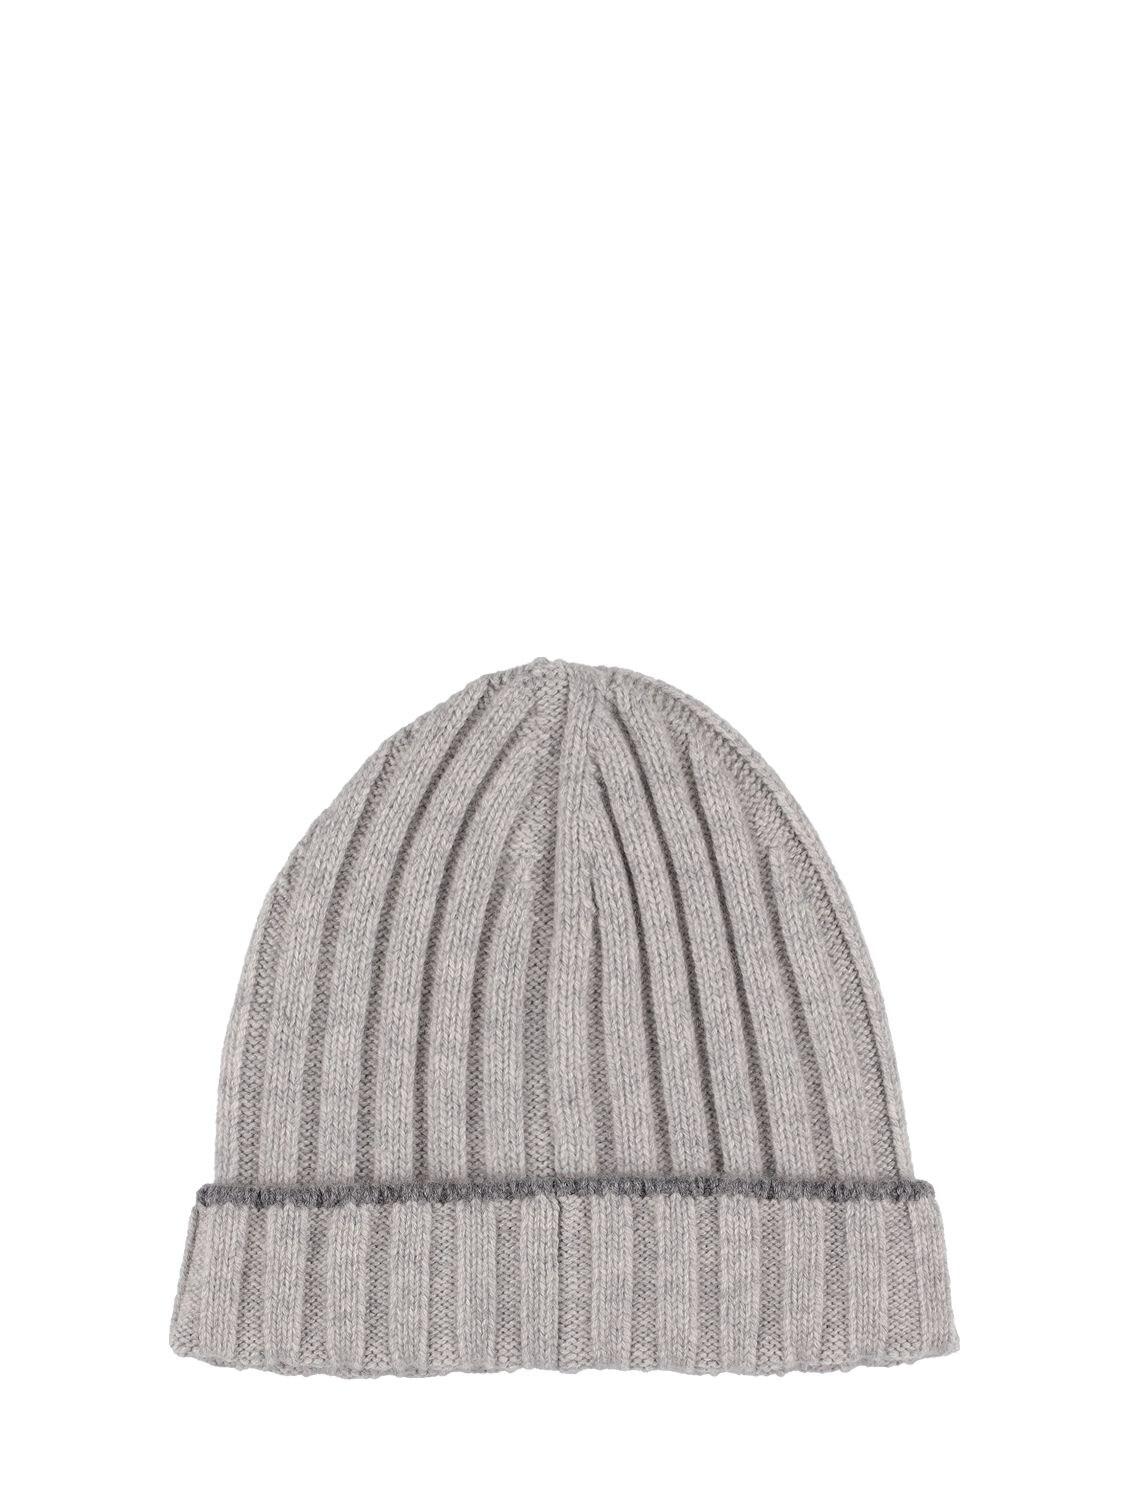 Brunello Cucinelli Cashmere Knit Hat in Gray for Men | Lyst